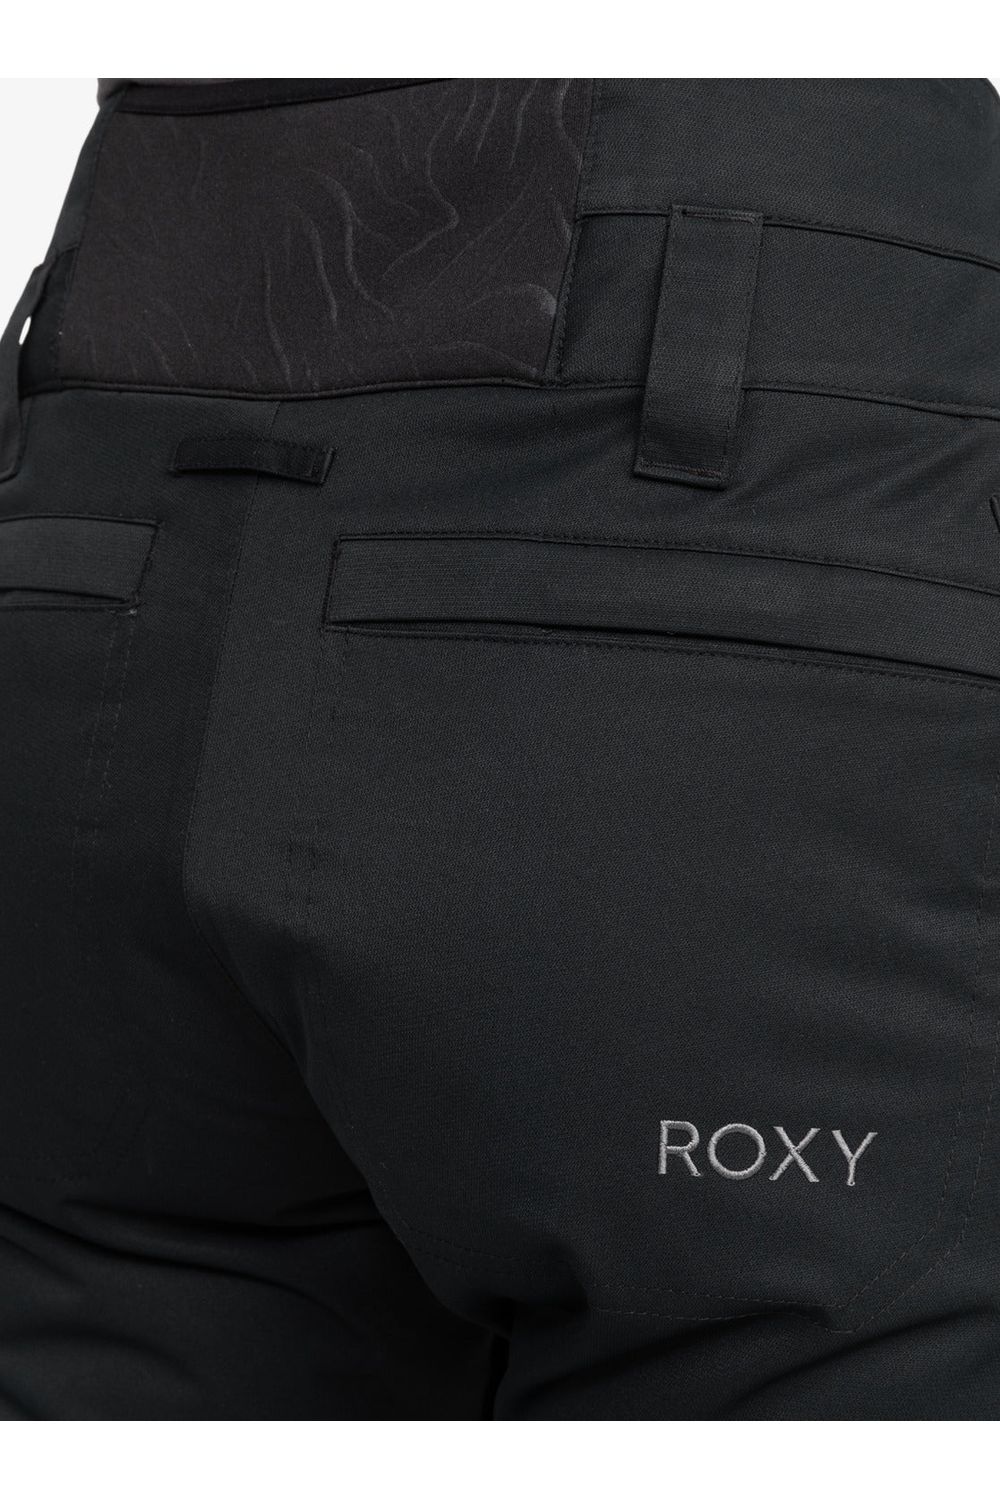 Roxy Diversion Snow Pant True Black